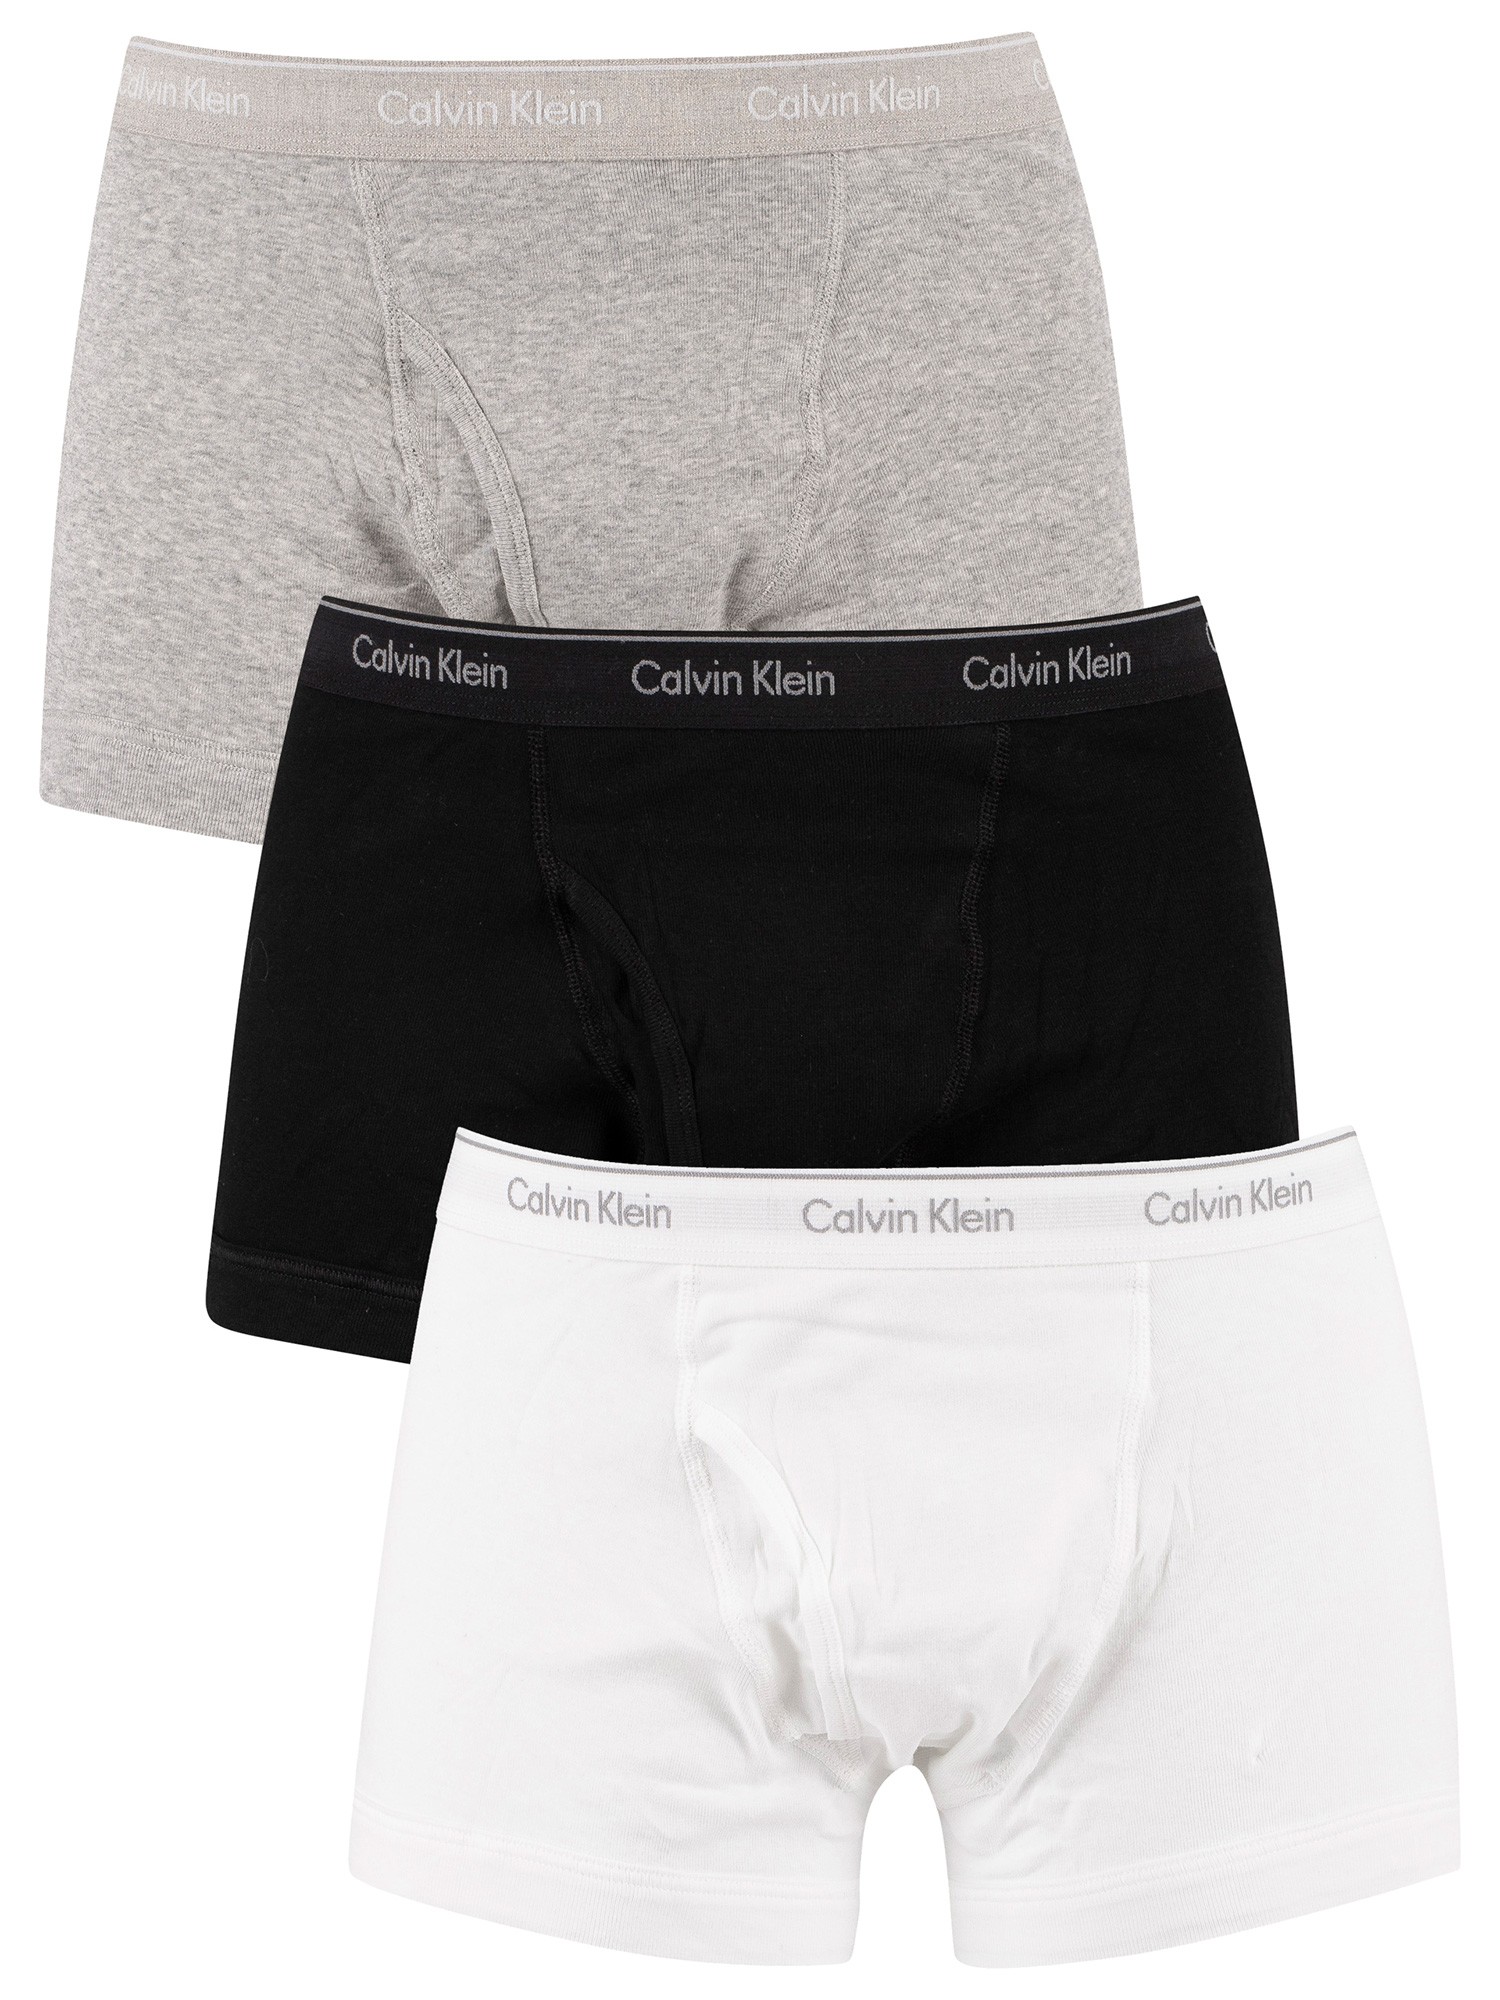 Calvin Klein 3 Pack Trunks - White/Black/Grey | Standout